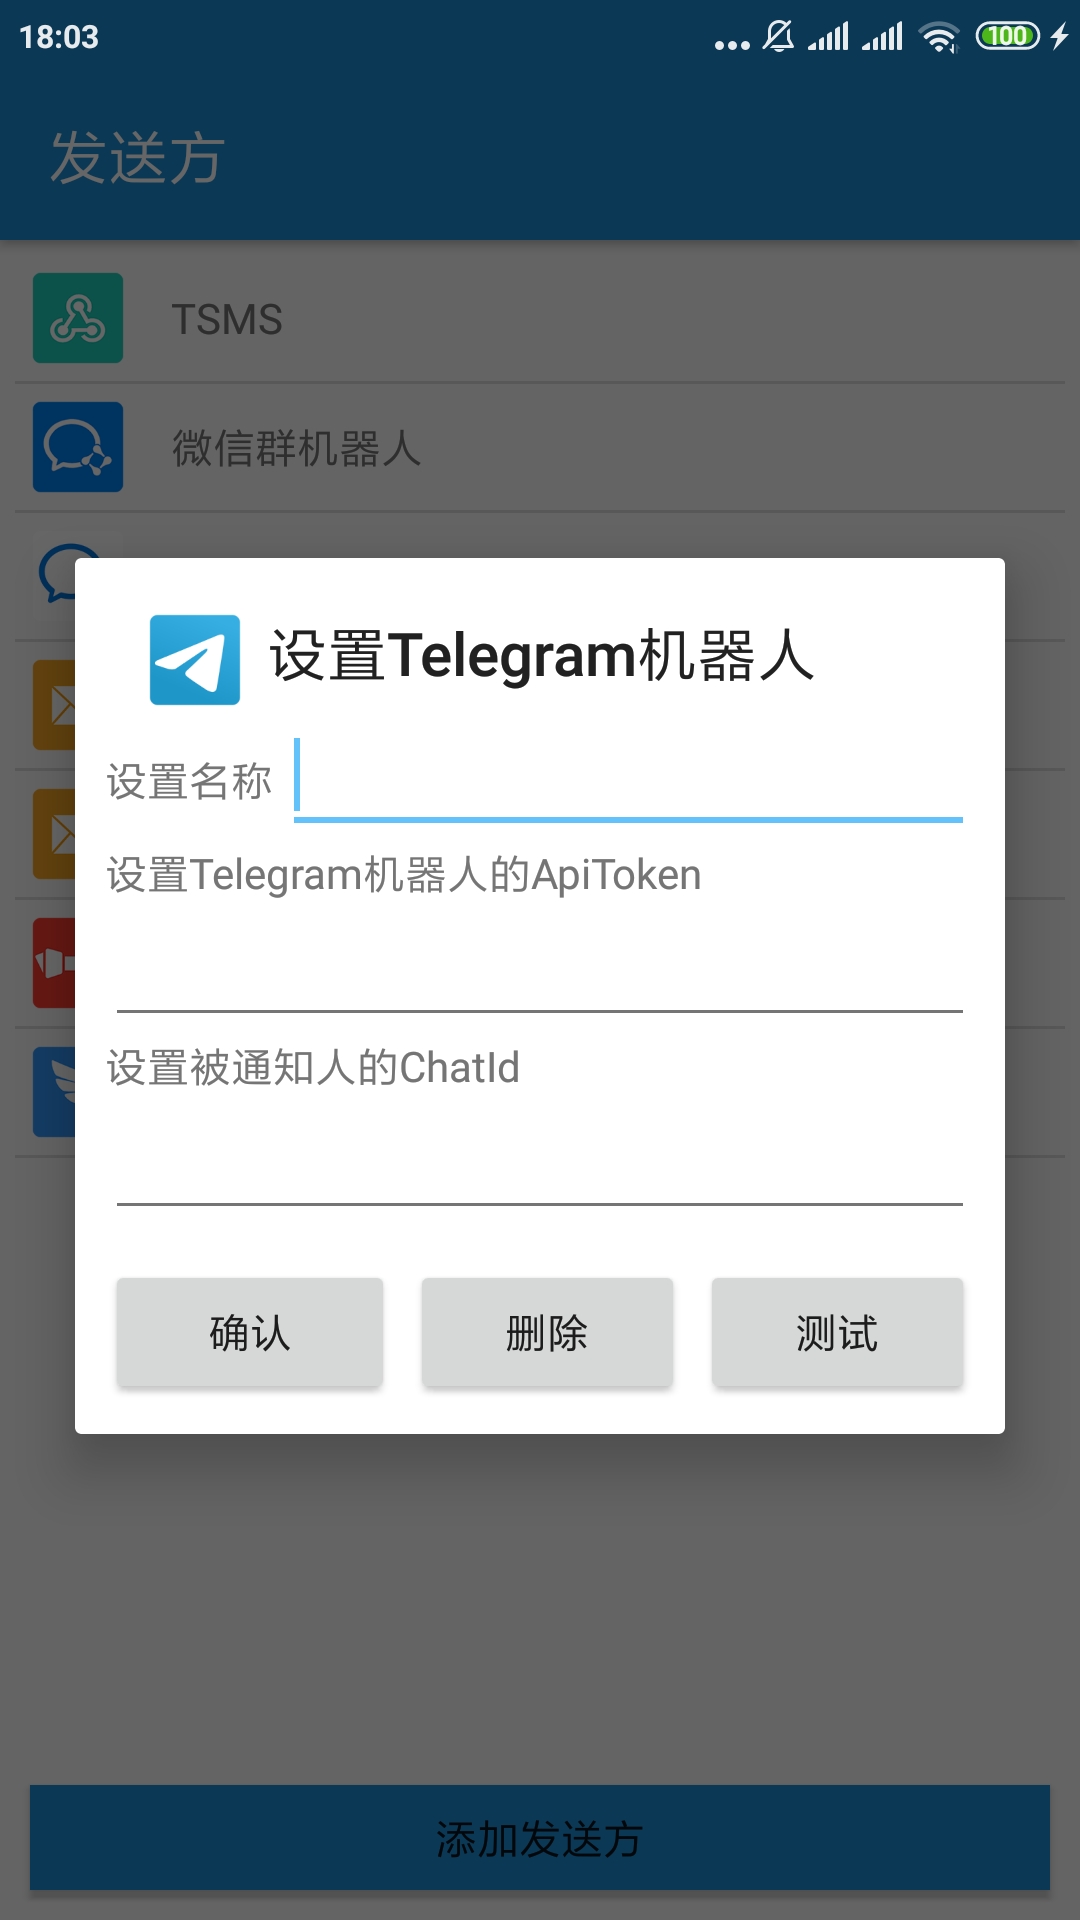 Add/Edit Telegram bot